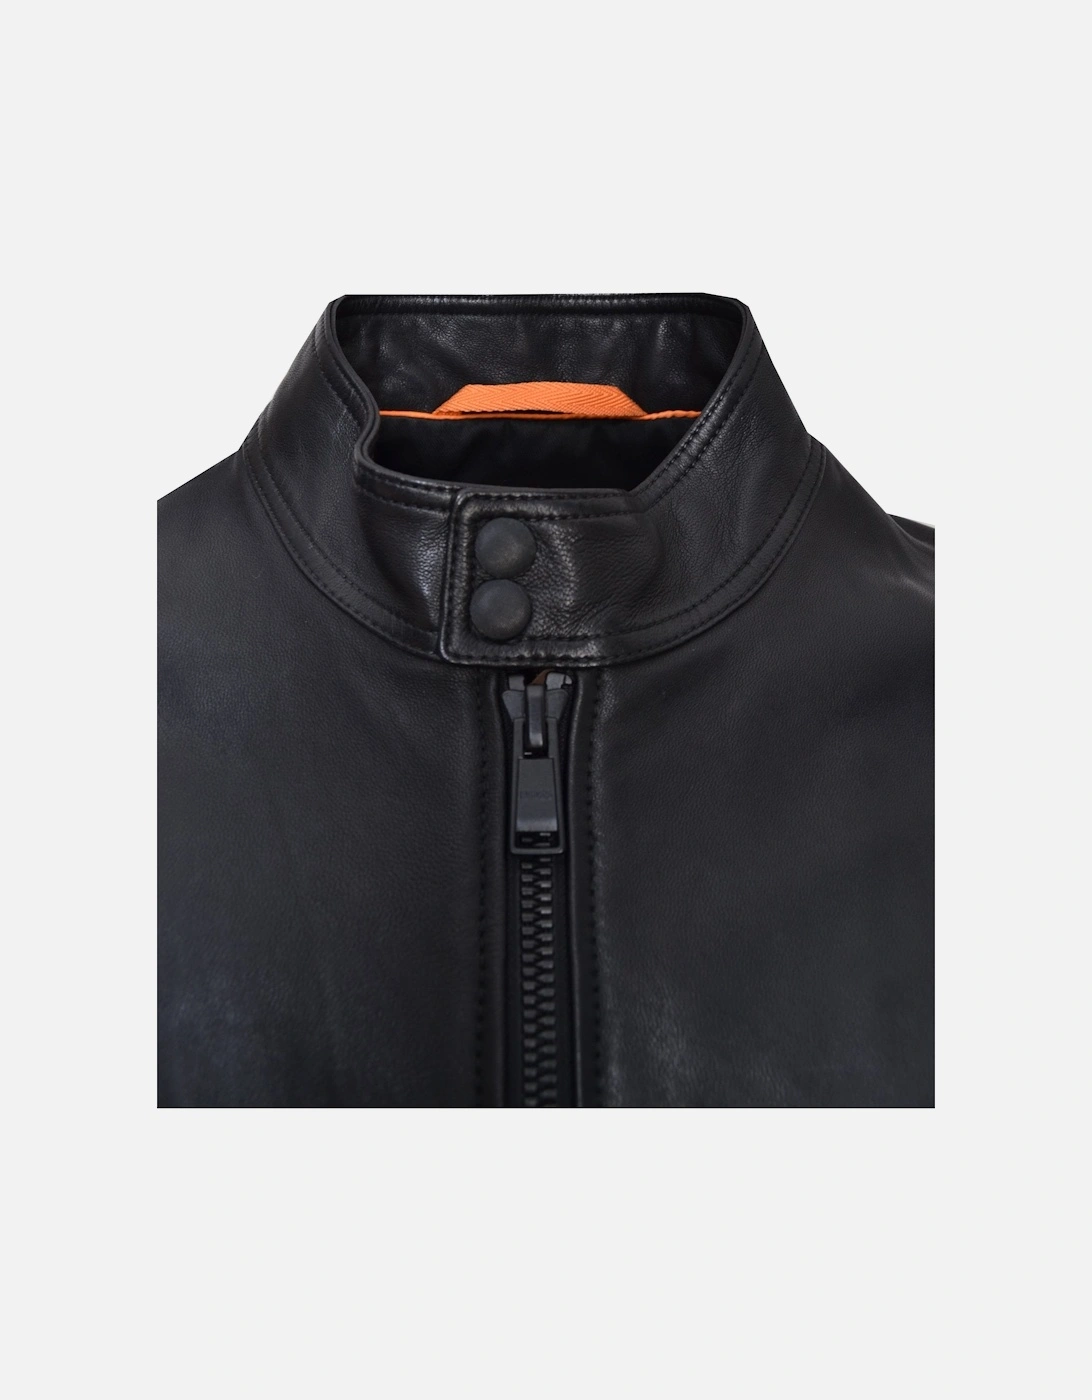 Men's Black Josep2 Leather Jacket.